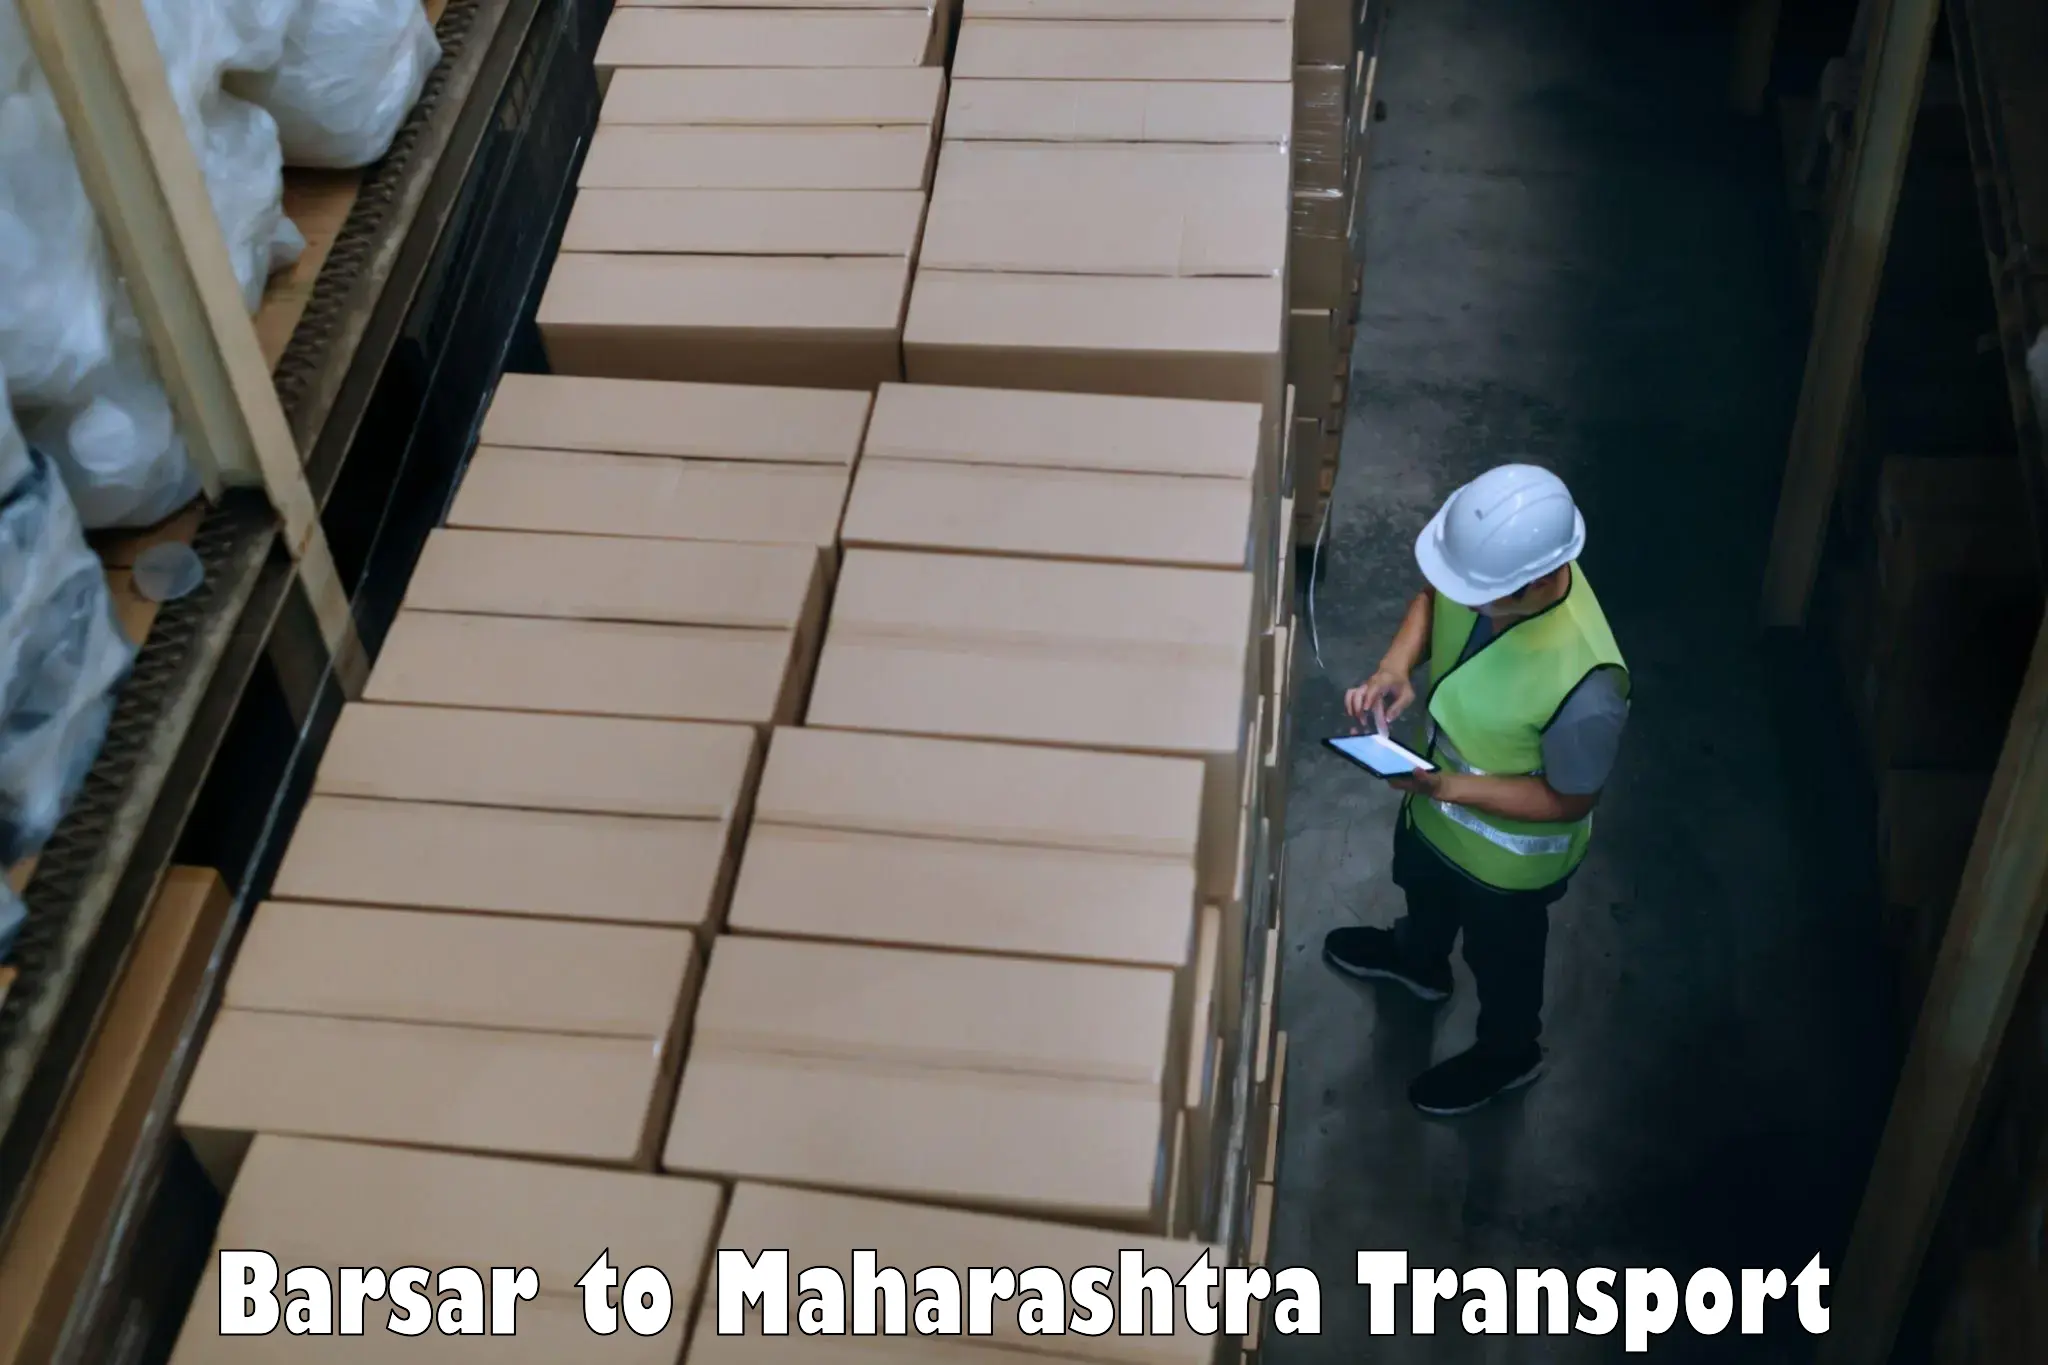 Truck transport companies in India Barsar to Kurkheda